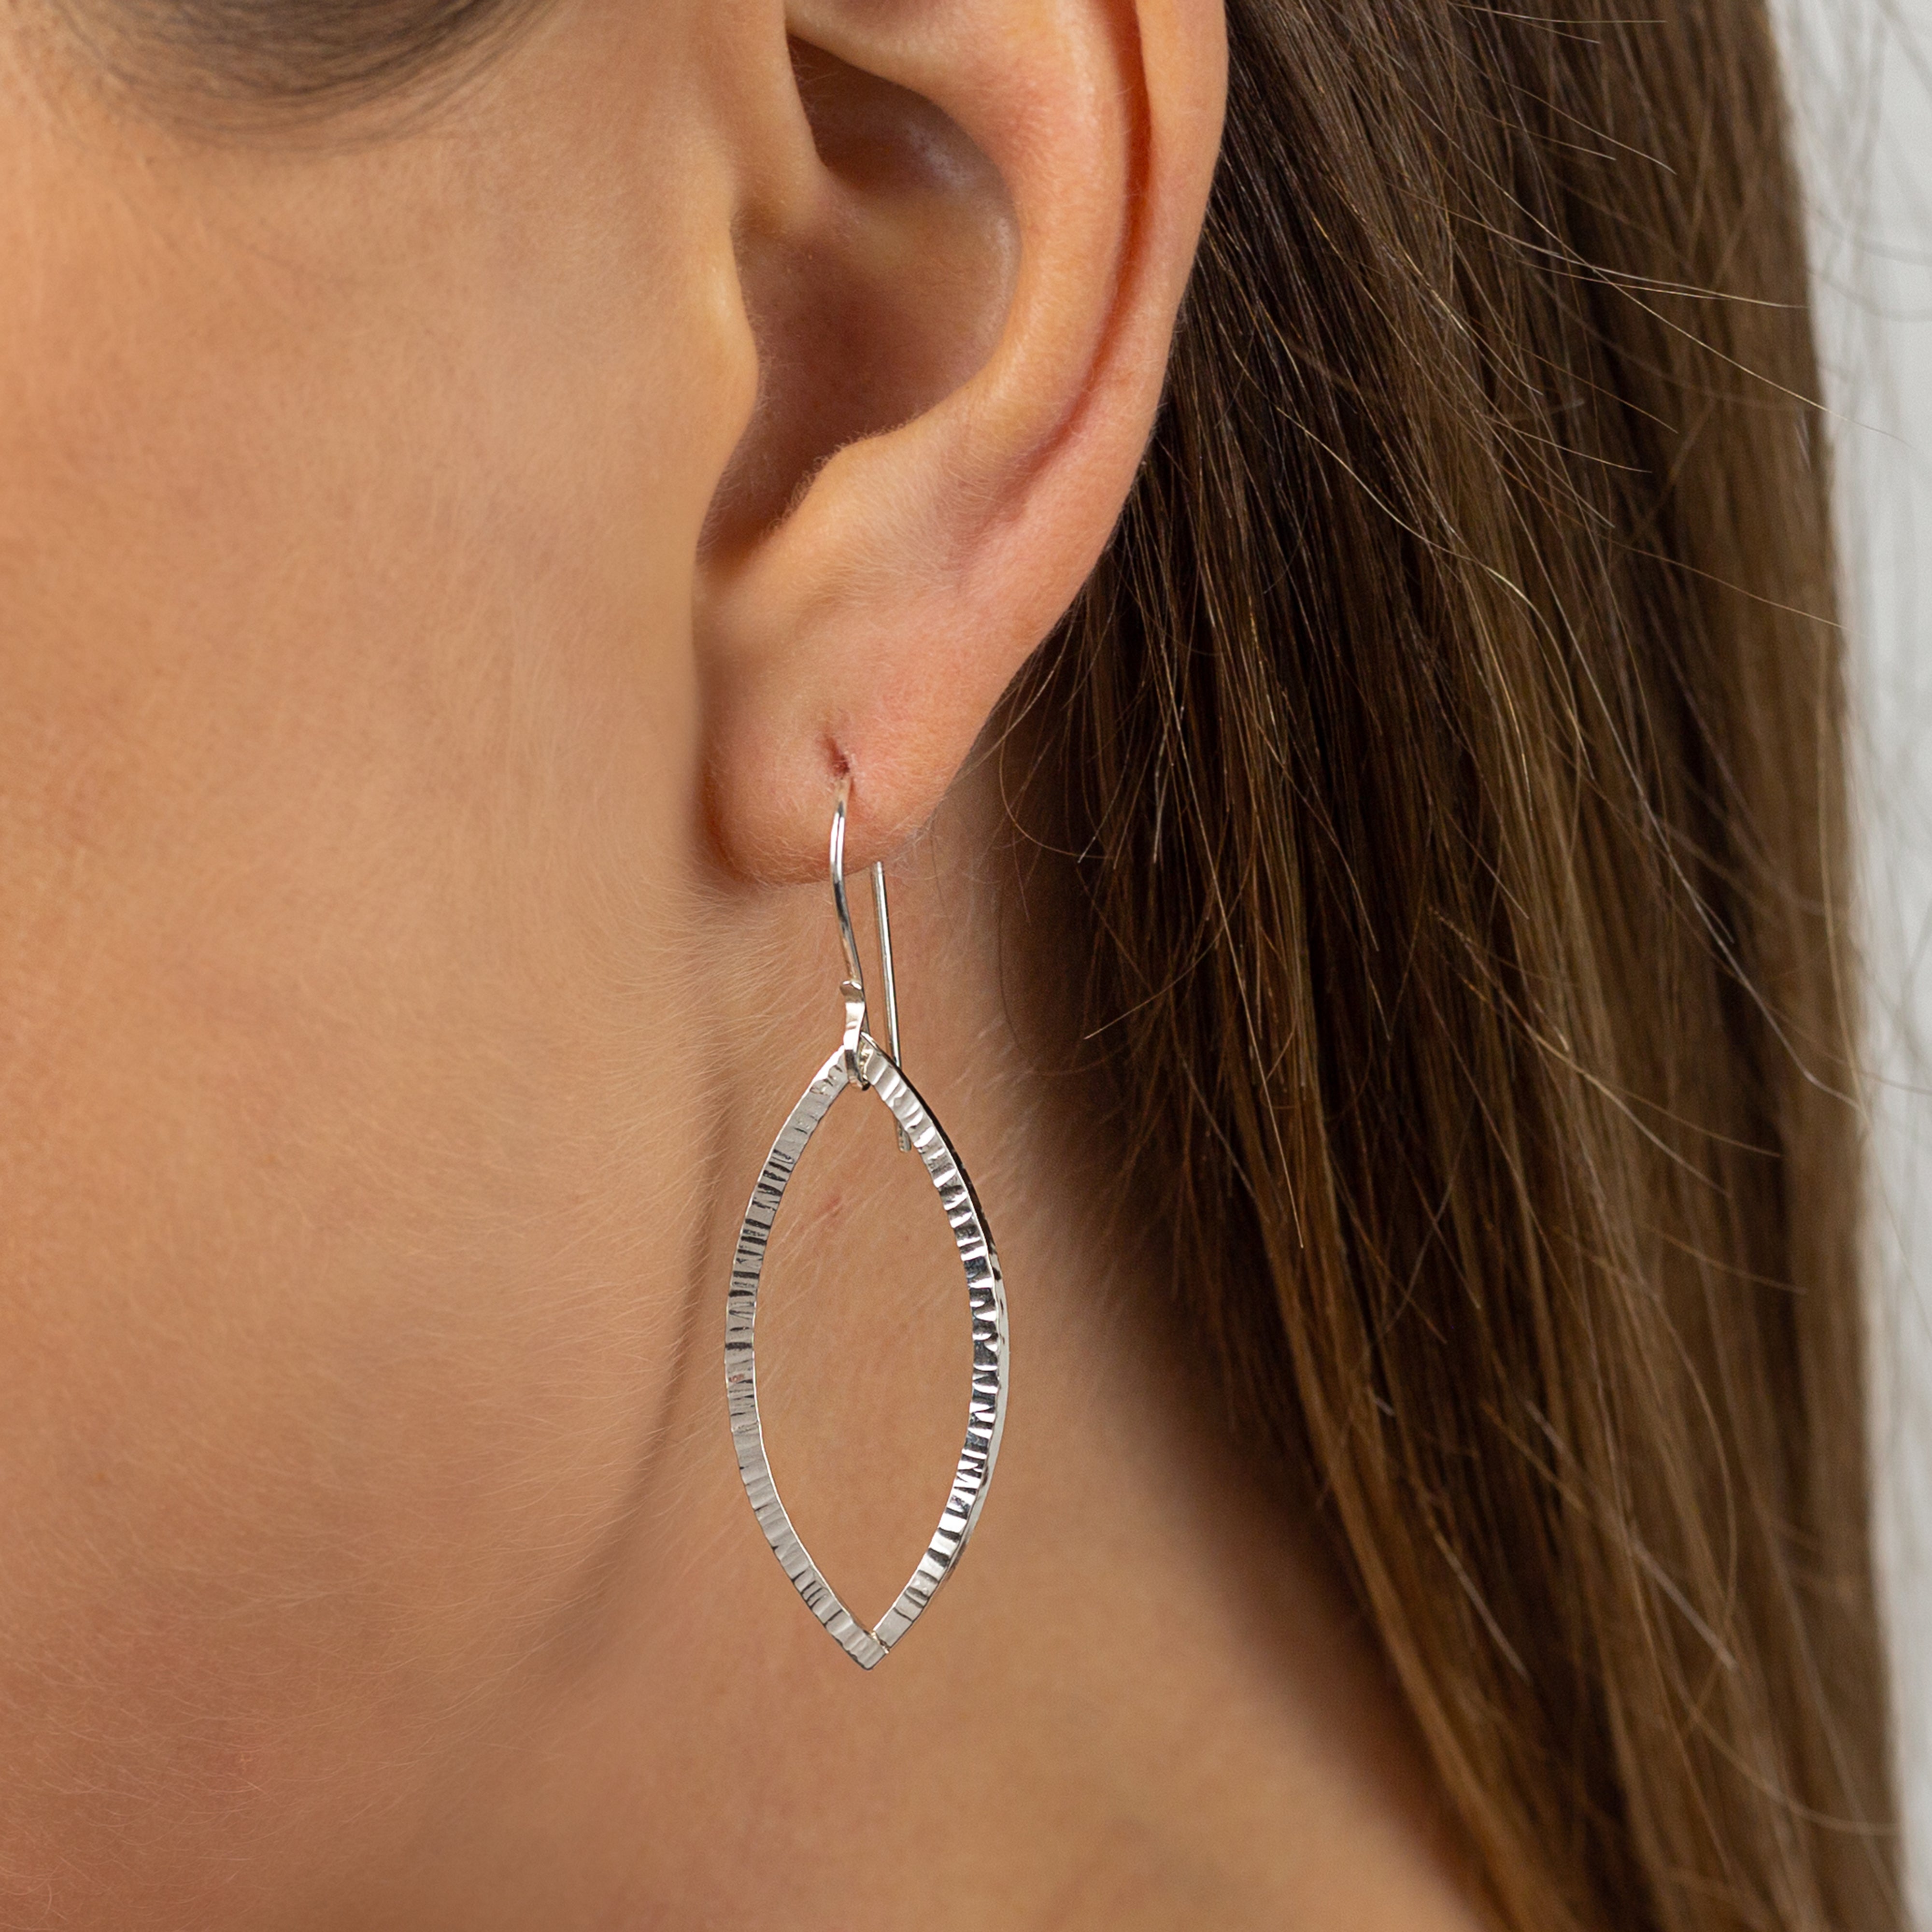 Hammered Silver Leaf Outline Earrings